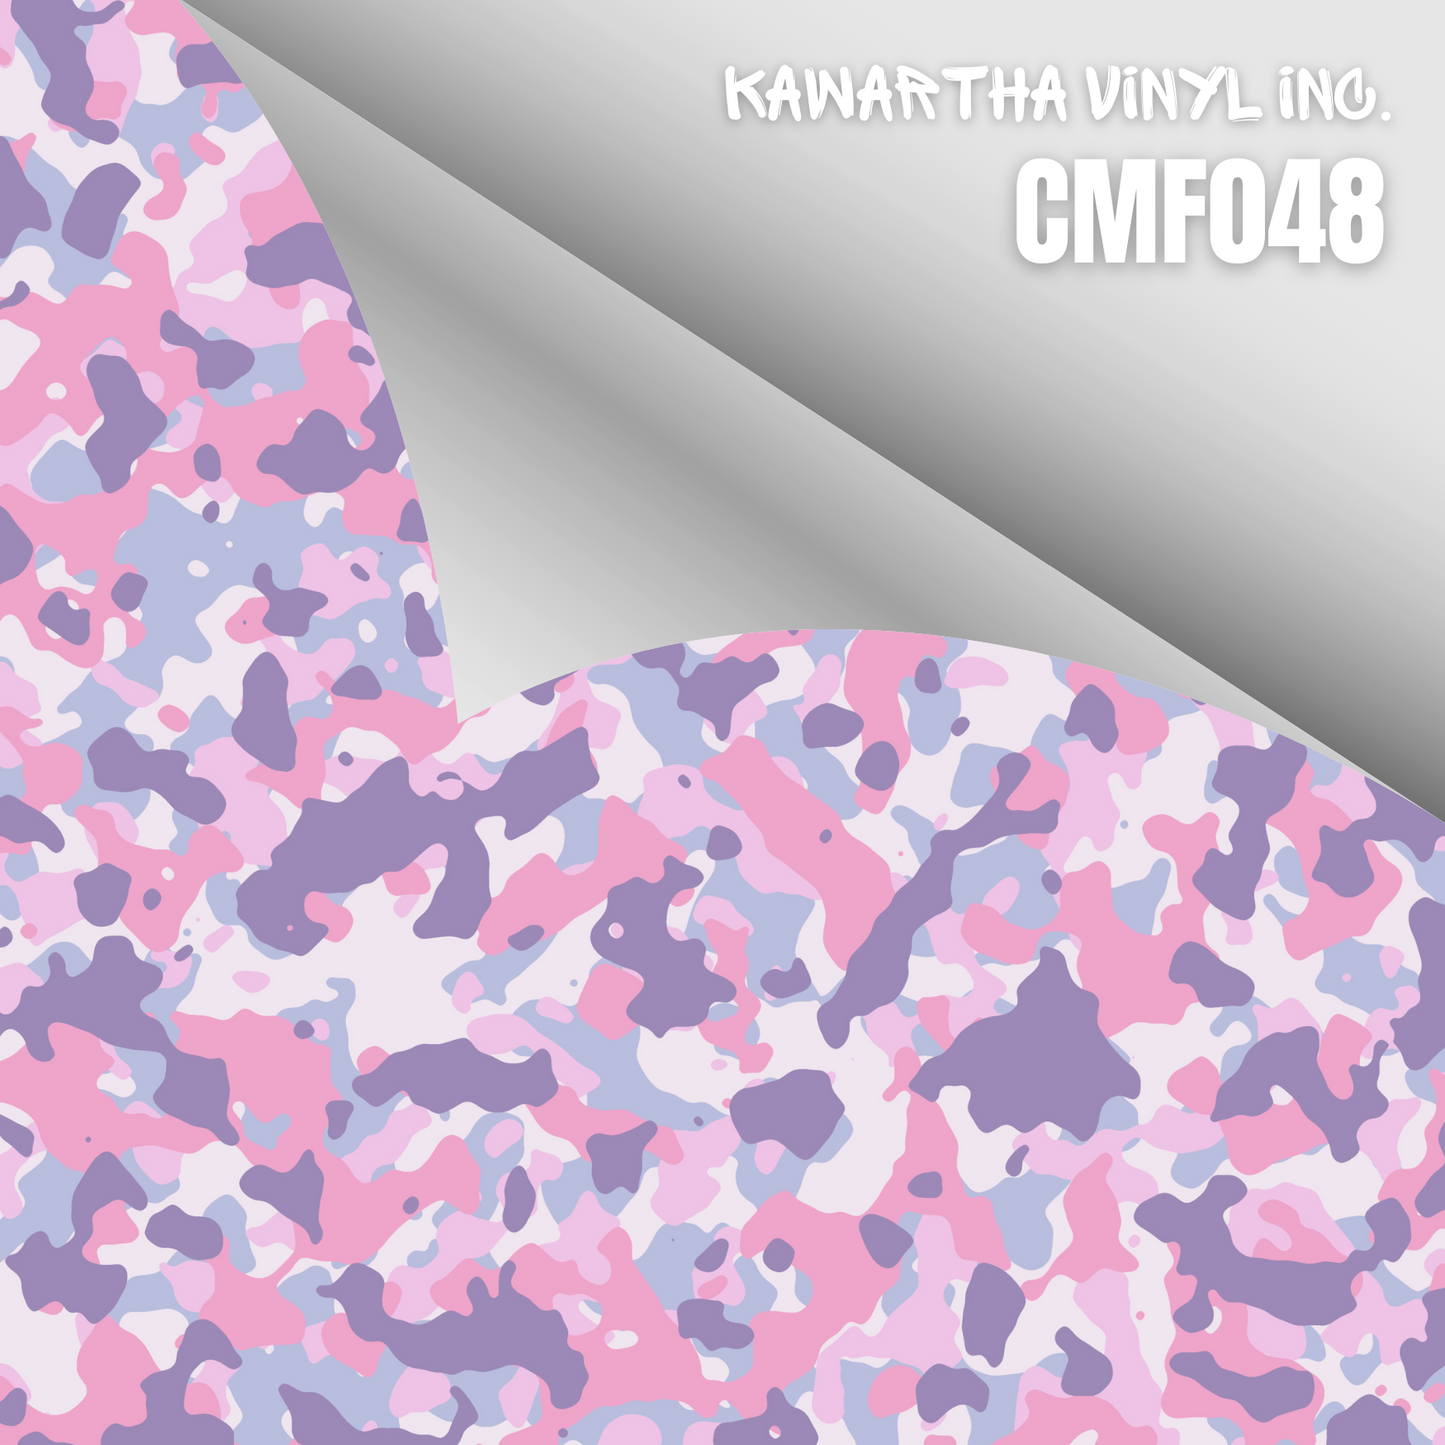 CMF048 Adhesive & HTV Patterns